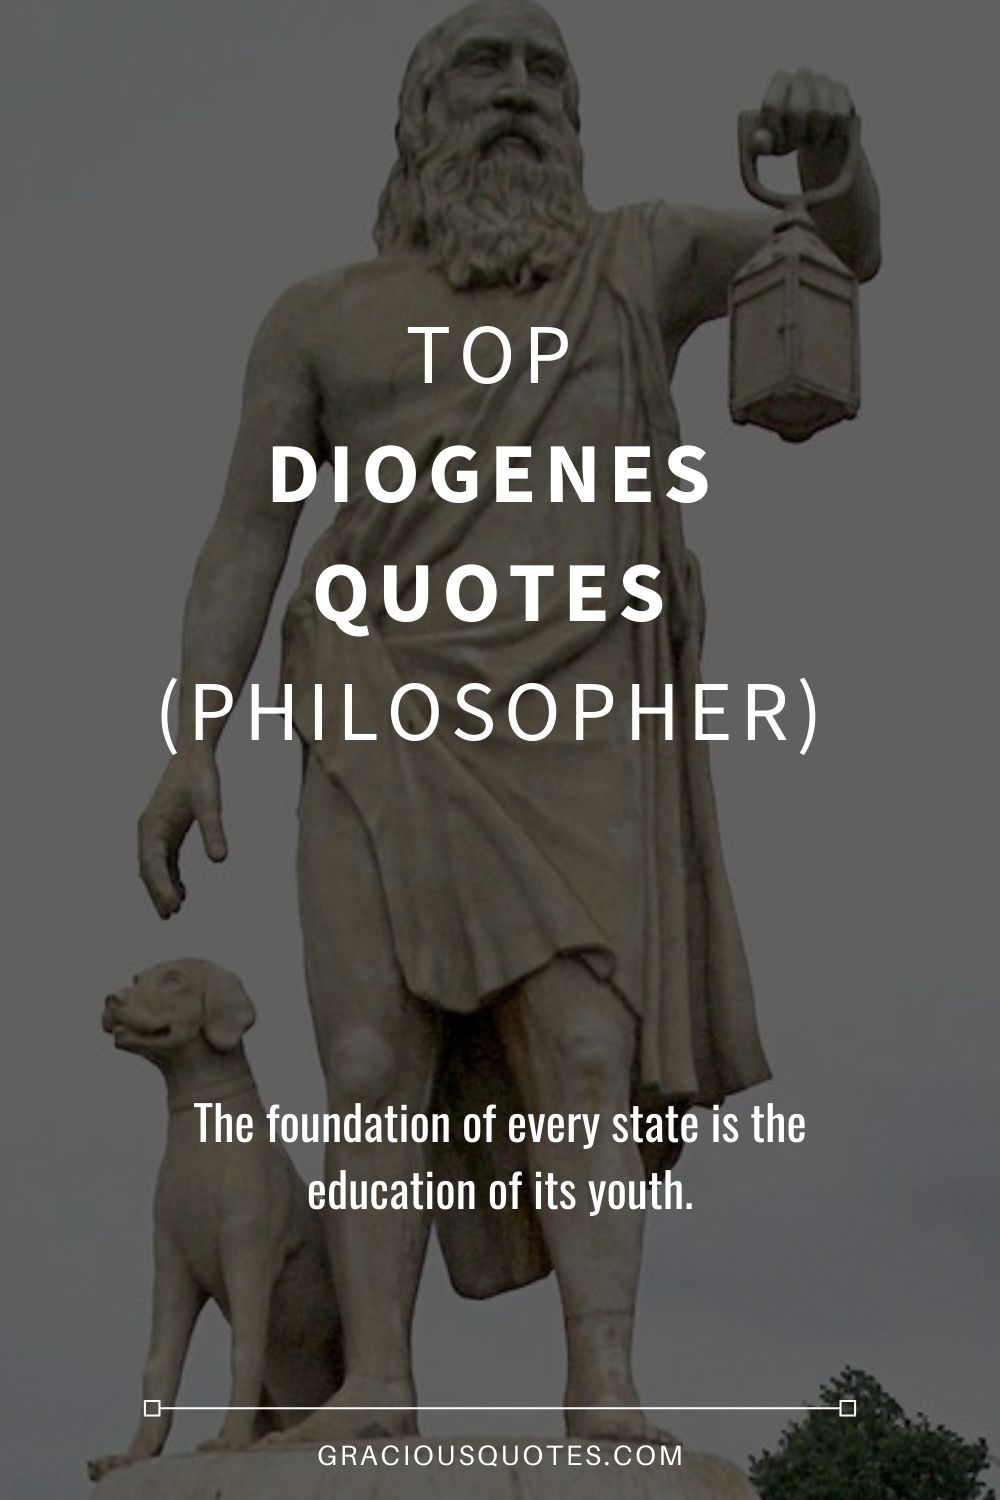 Top Diogenes Quotes (PHILOSOPHER) - Gracious Quotes